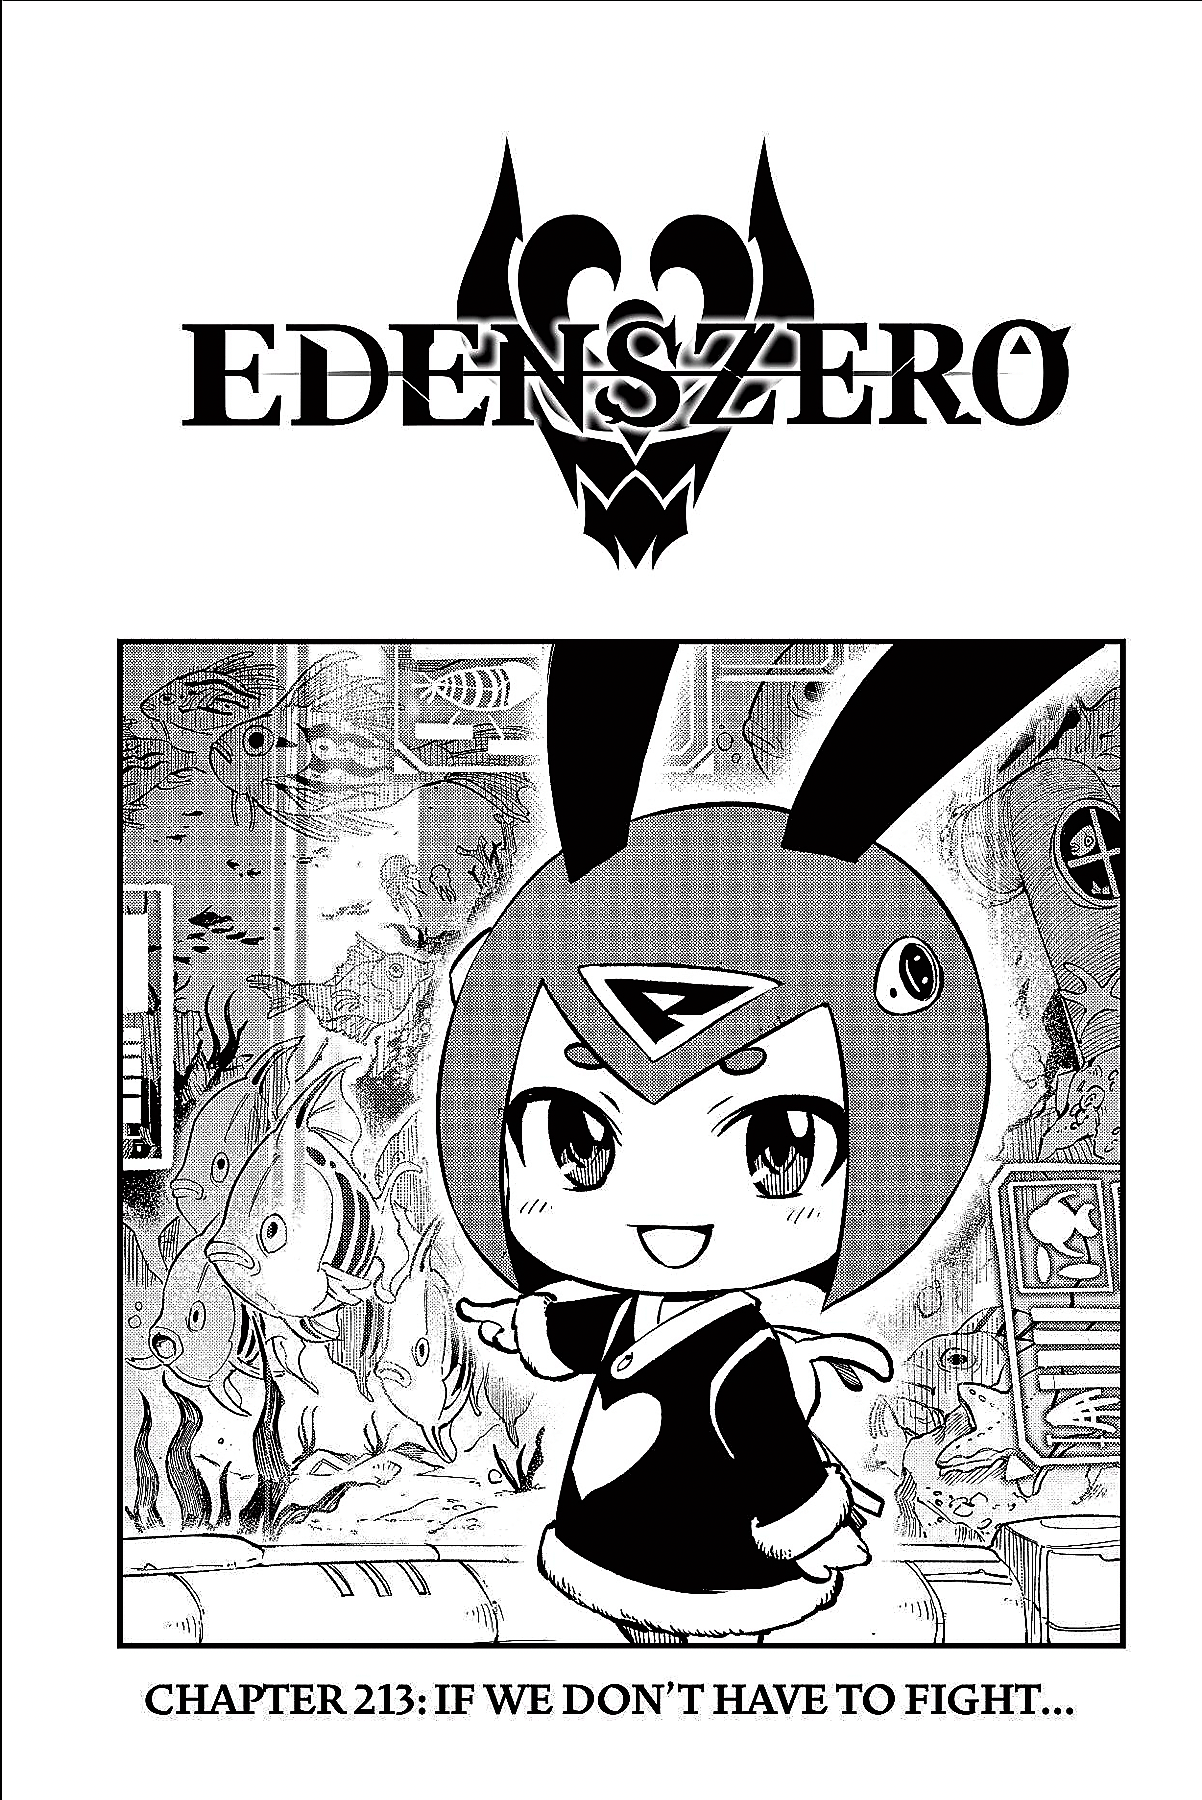 The Next Level. Edens Zero Chapter 213 BREAKDOWN